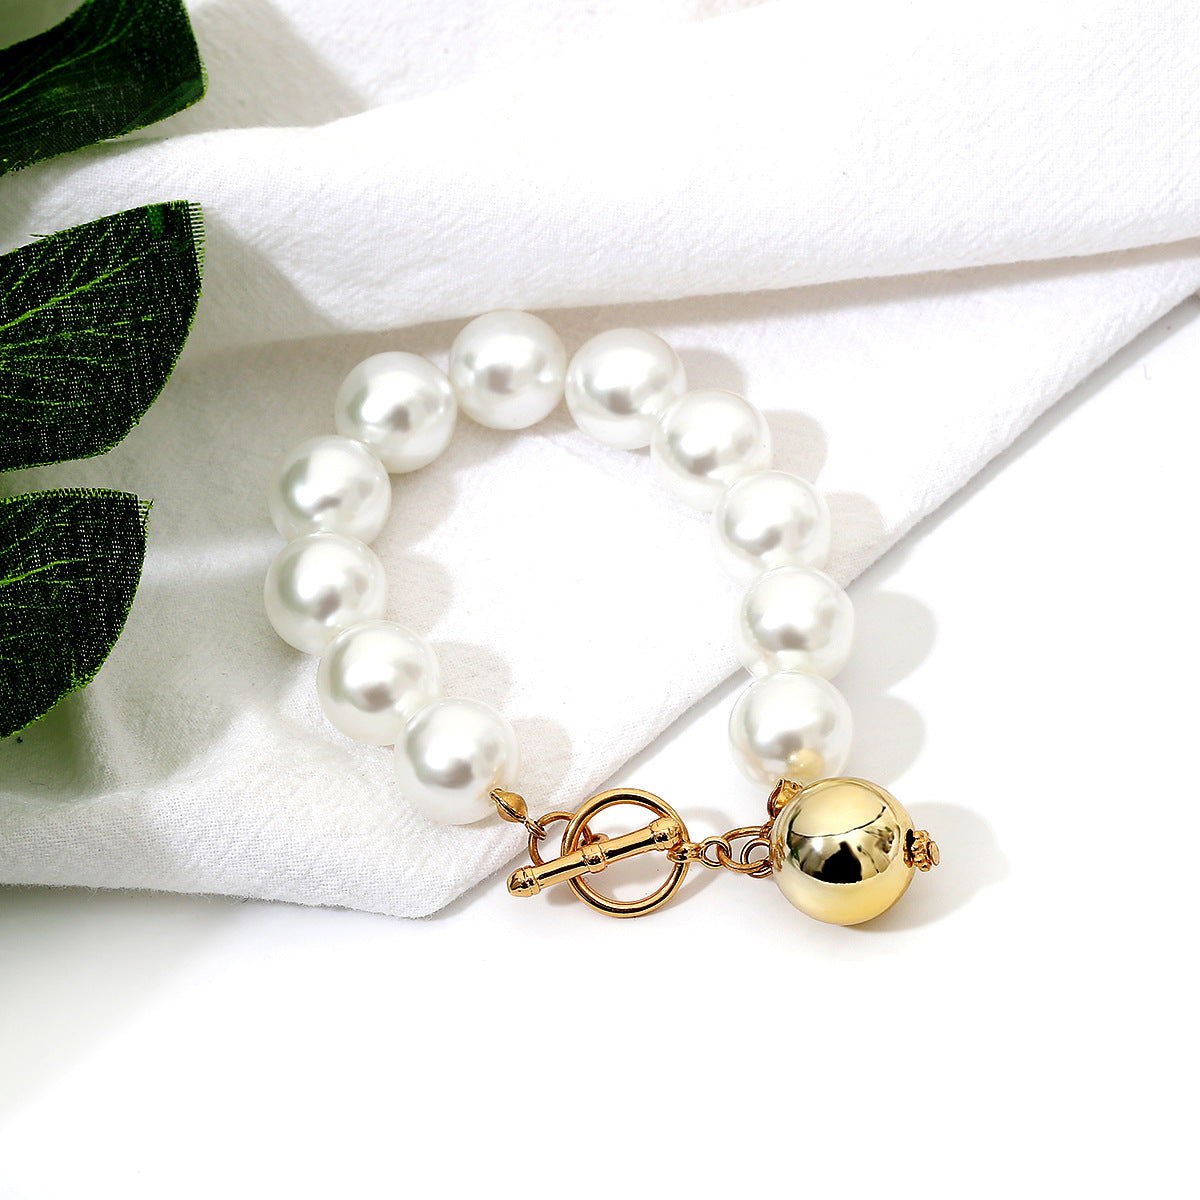 Irregular pearl bracelet